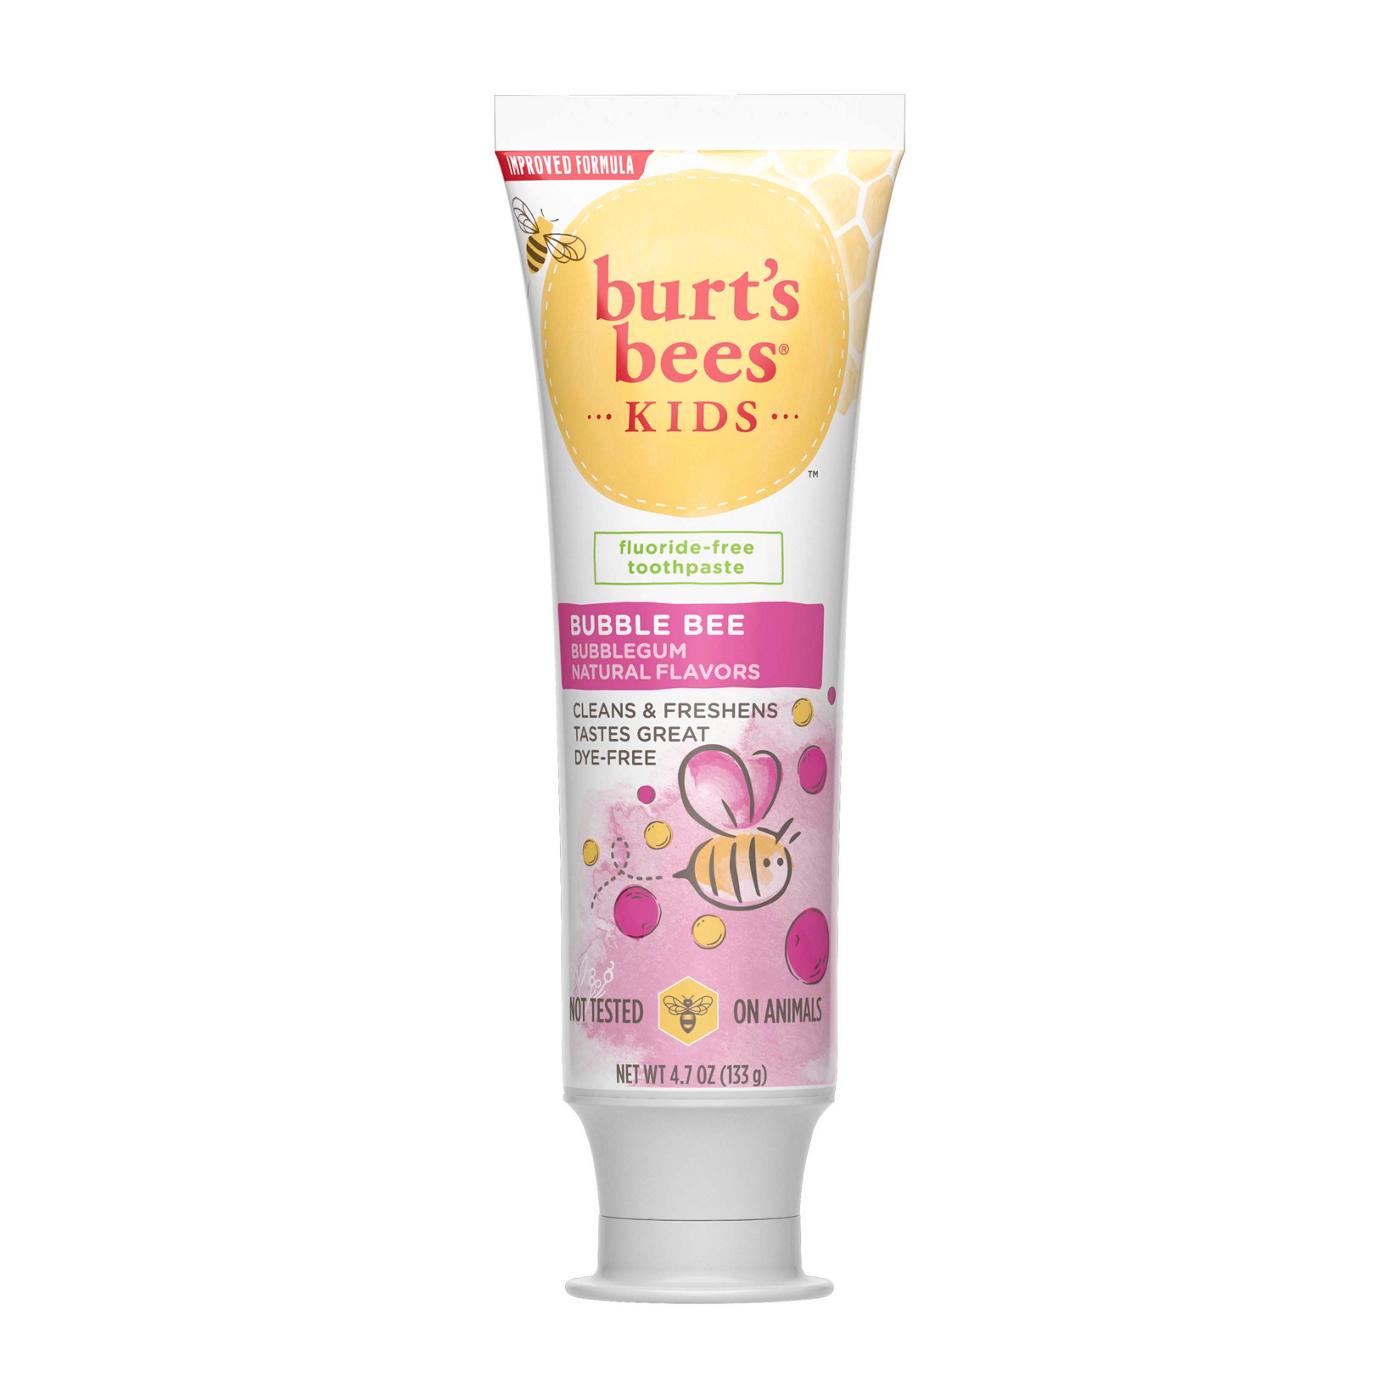 Burt's Bees Kids Fluoride-Free Toothpaste - Bubble Bee Bubblegum; image 1 of 7